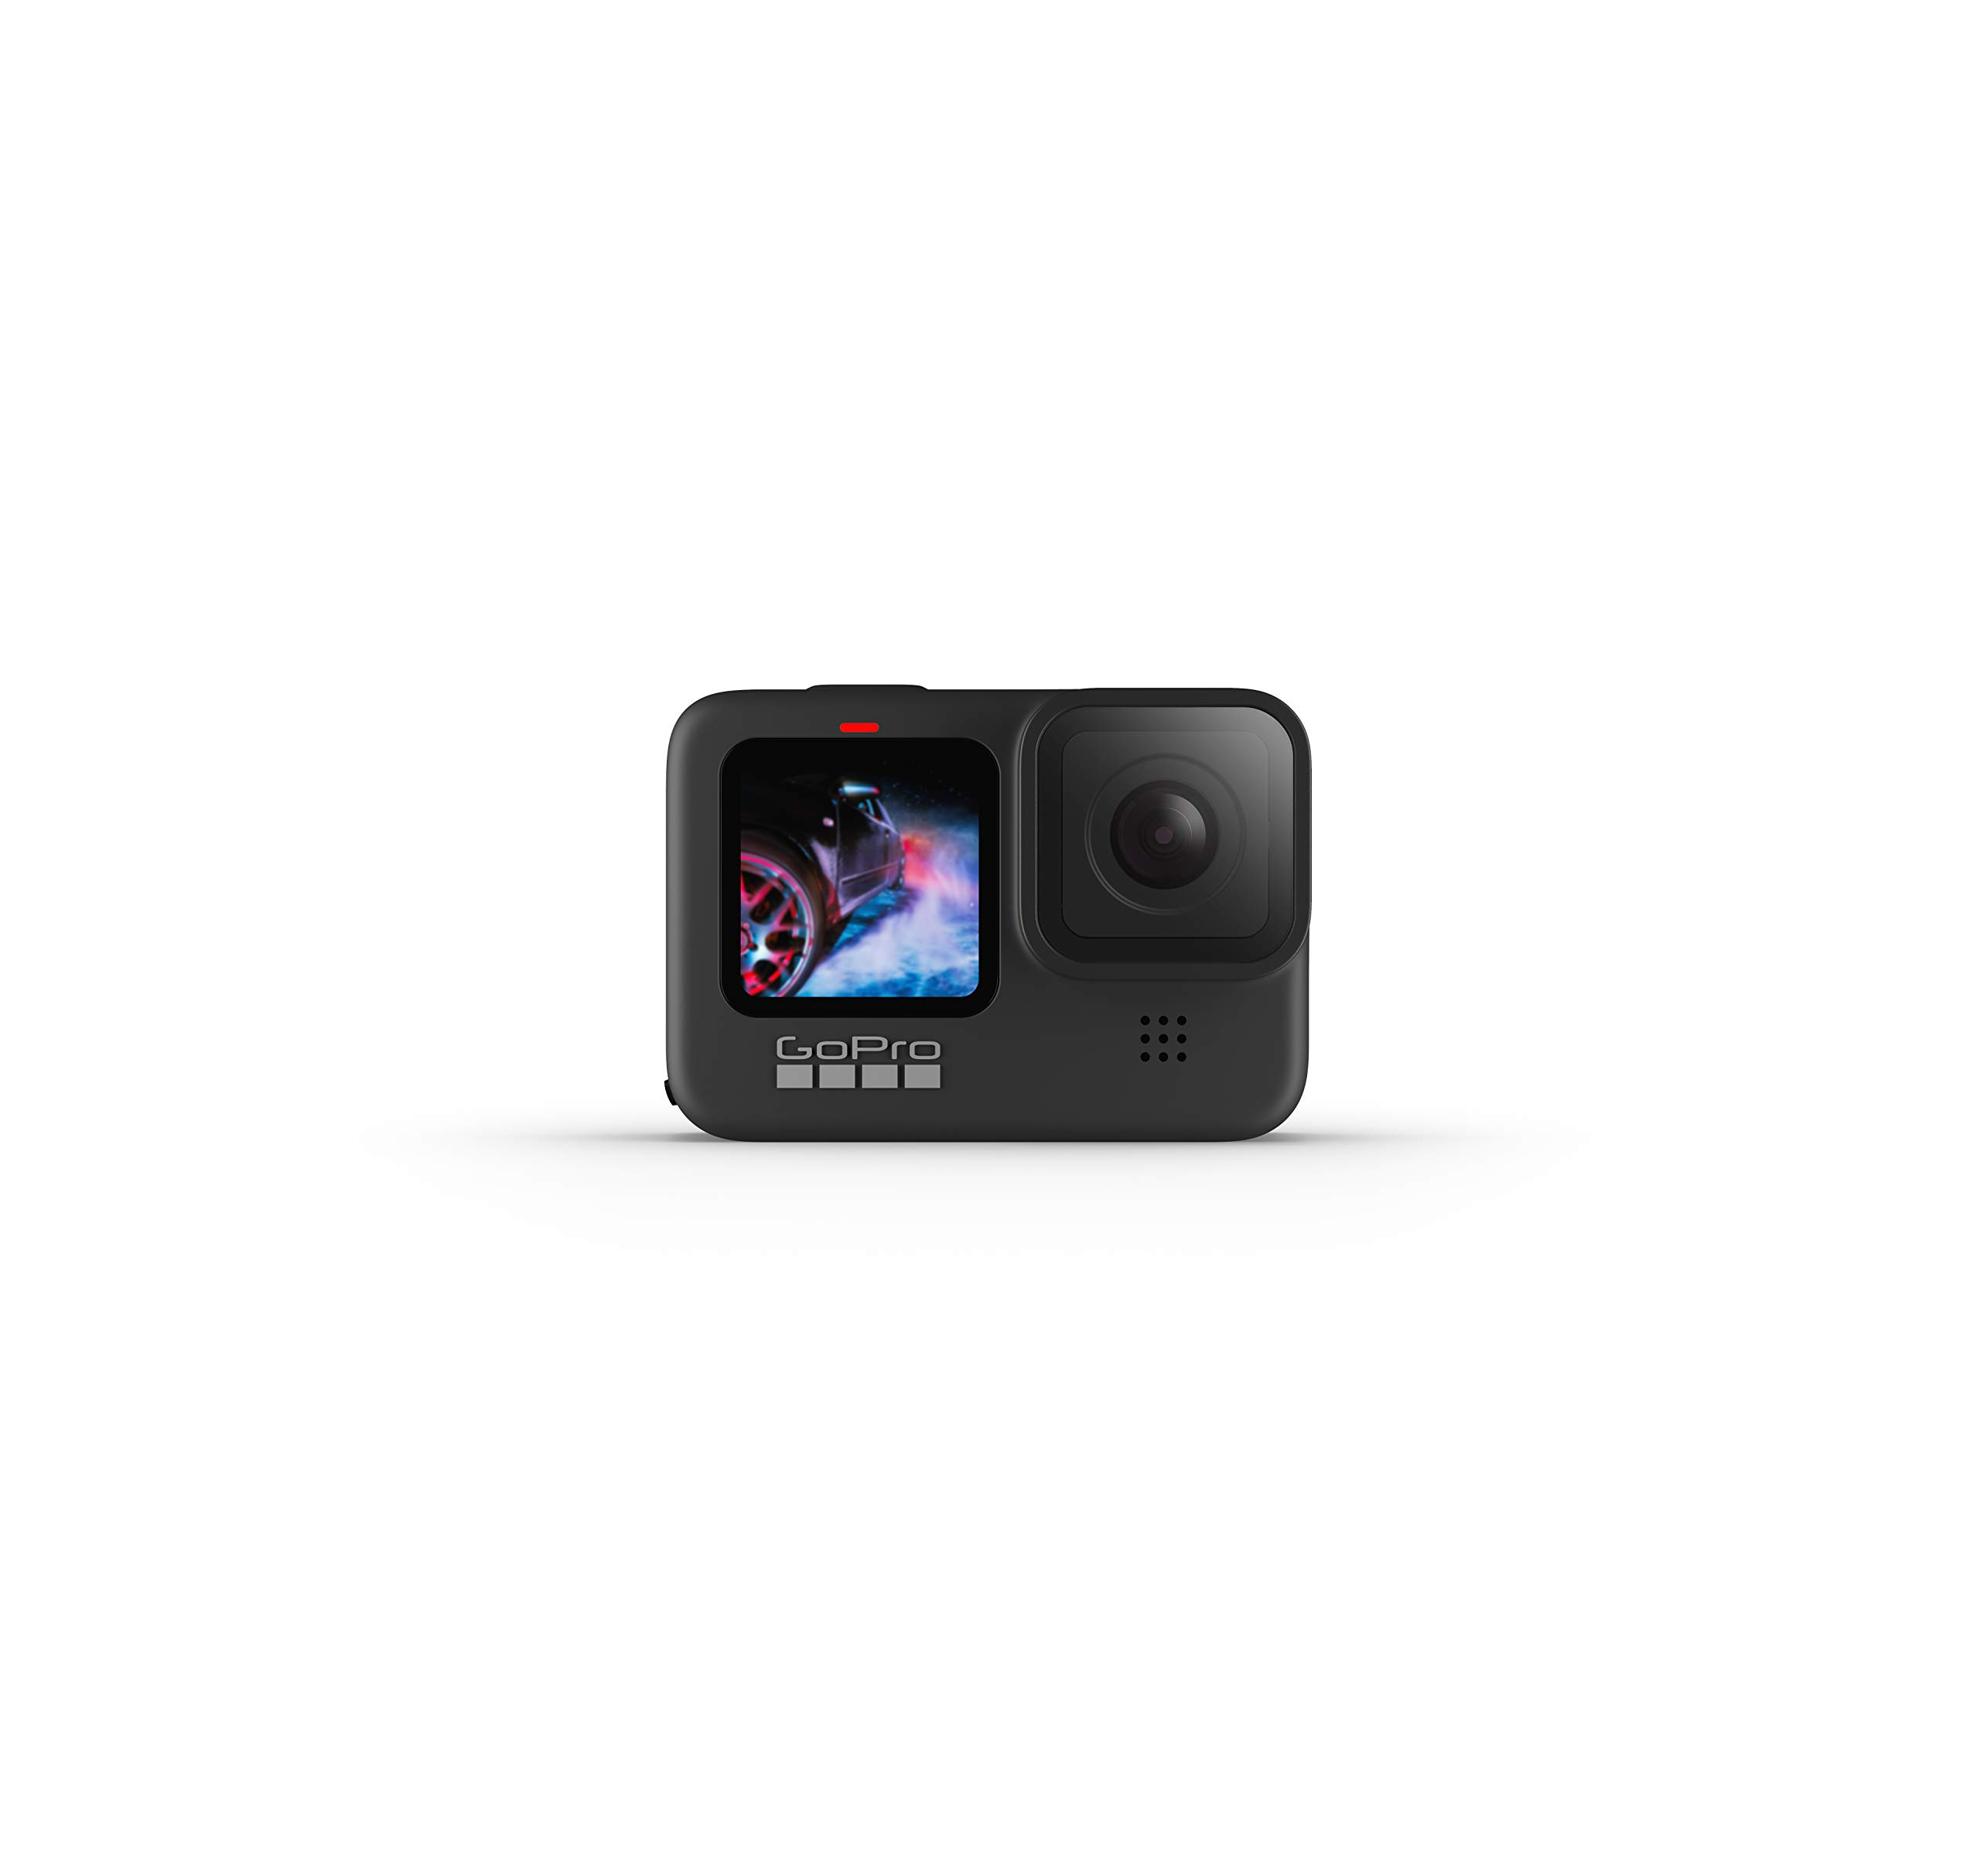 GoPro HERO9 Black - Waterproof Action Camera with Front...